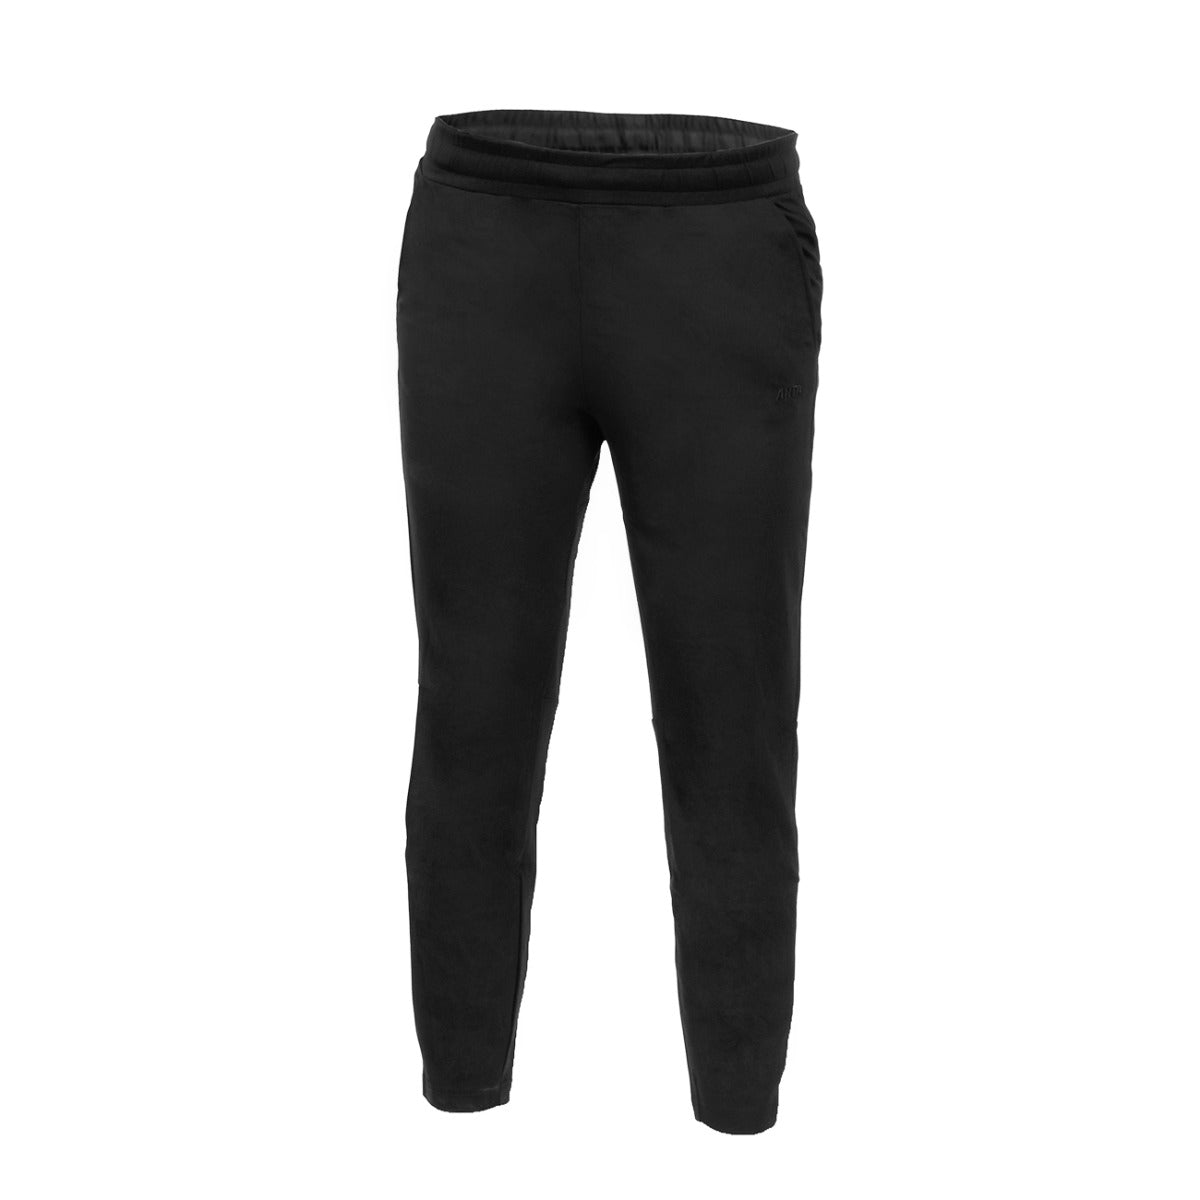 Anta Comfort Lifestyle Pants For Women, Black